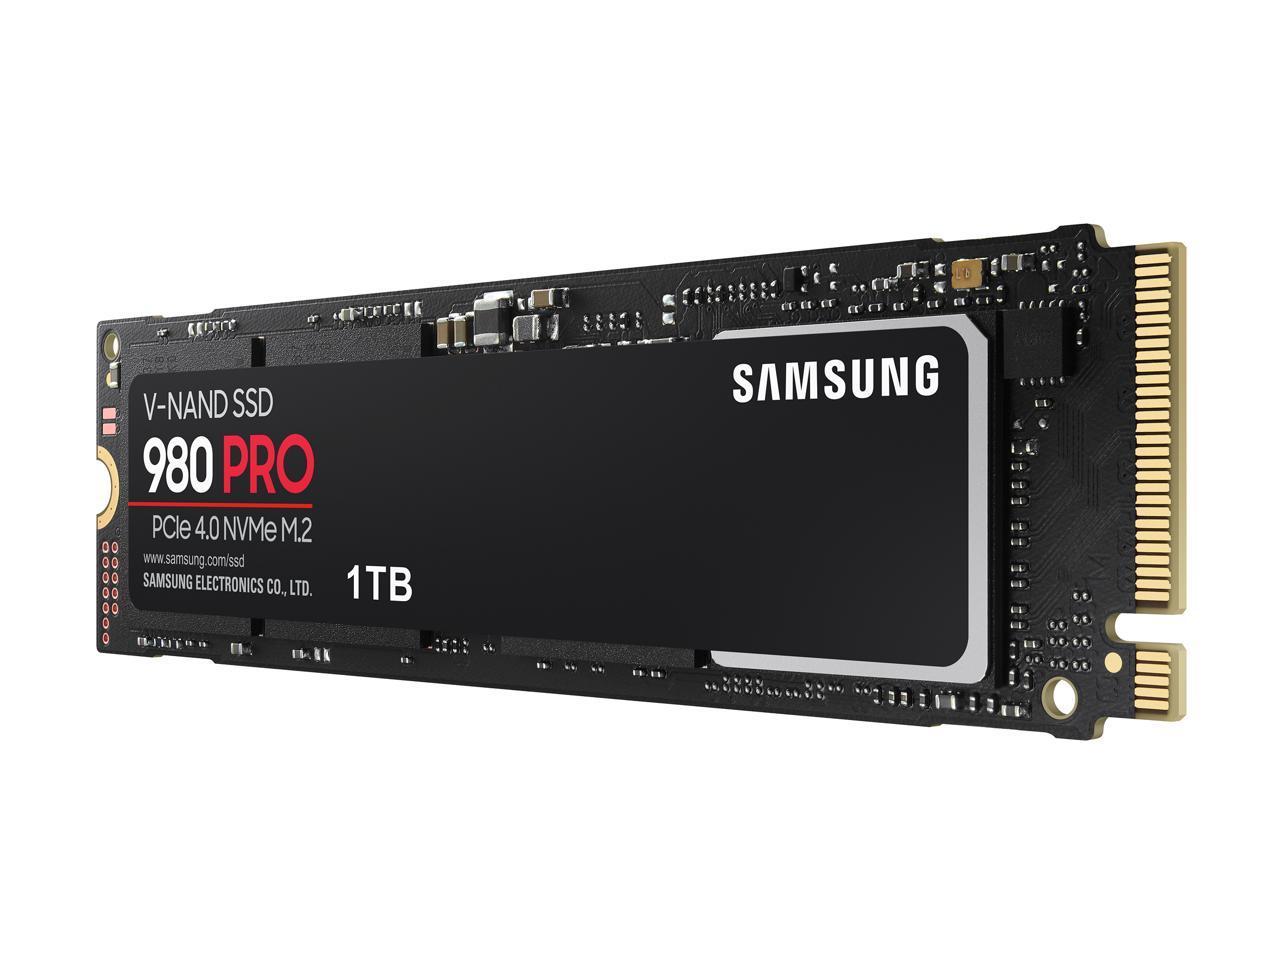 SAMSUNG 980 PRO 1TB M.2 SSD